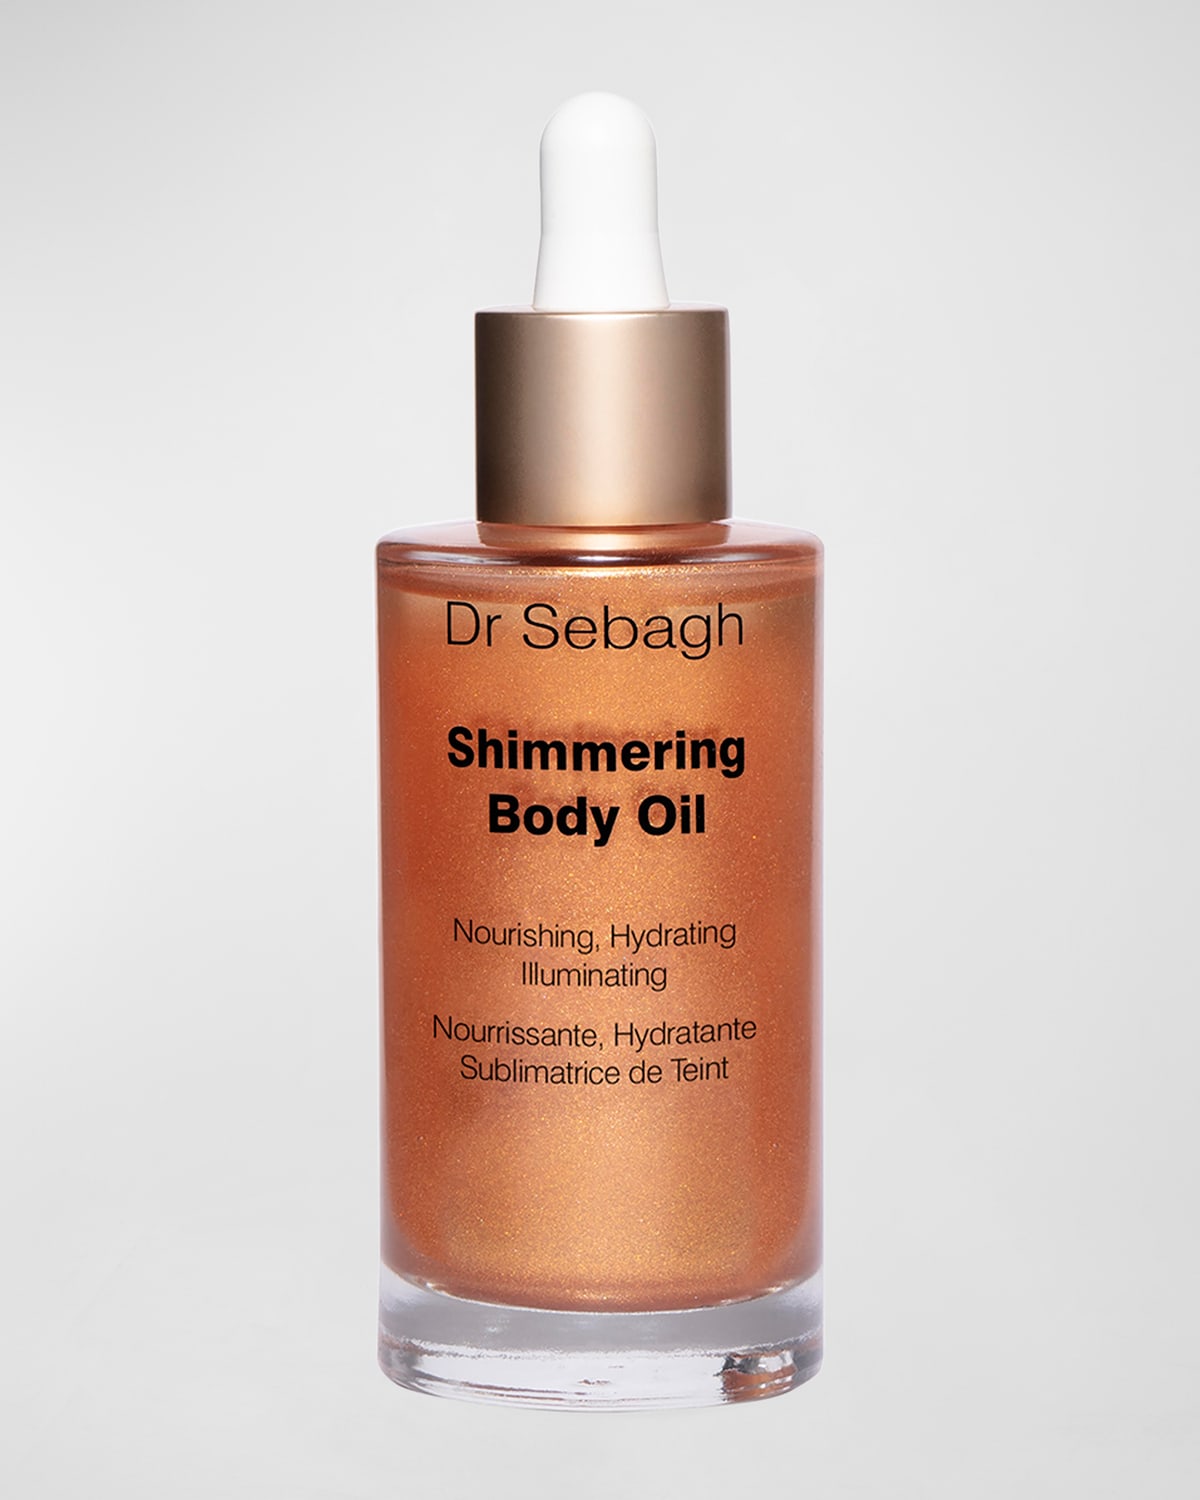 Dr Sebagh Shimmering Body Oil, 1.7 oz.